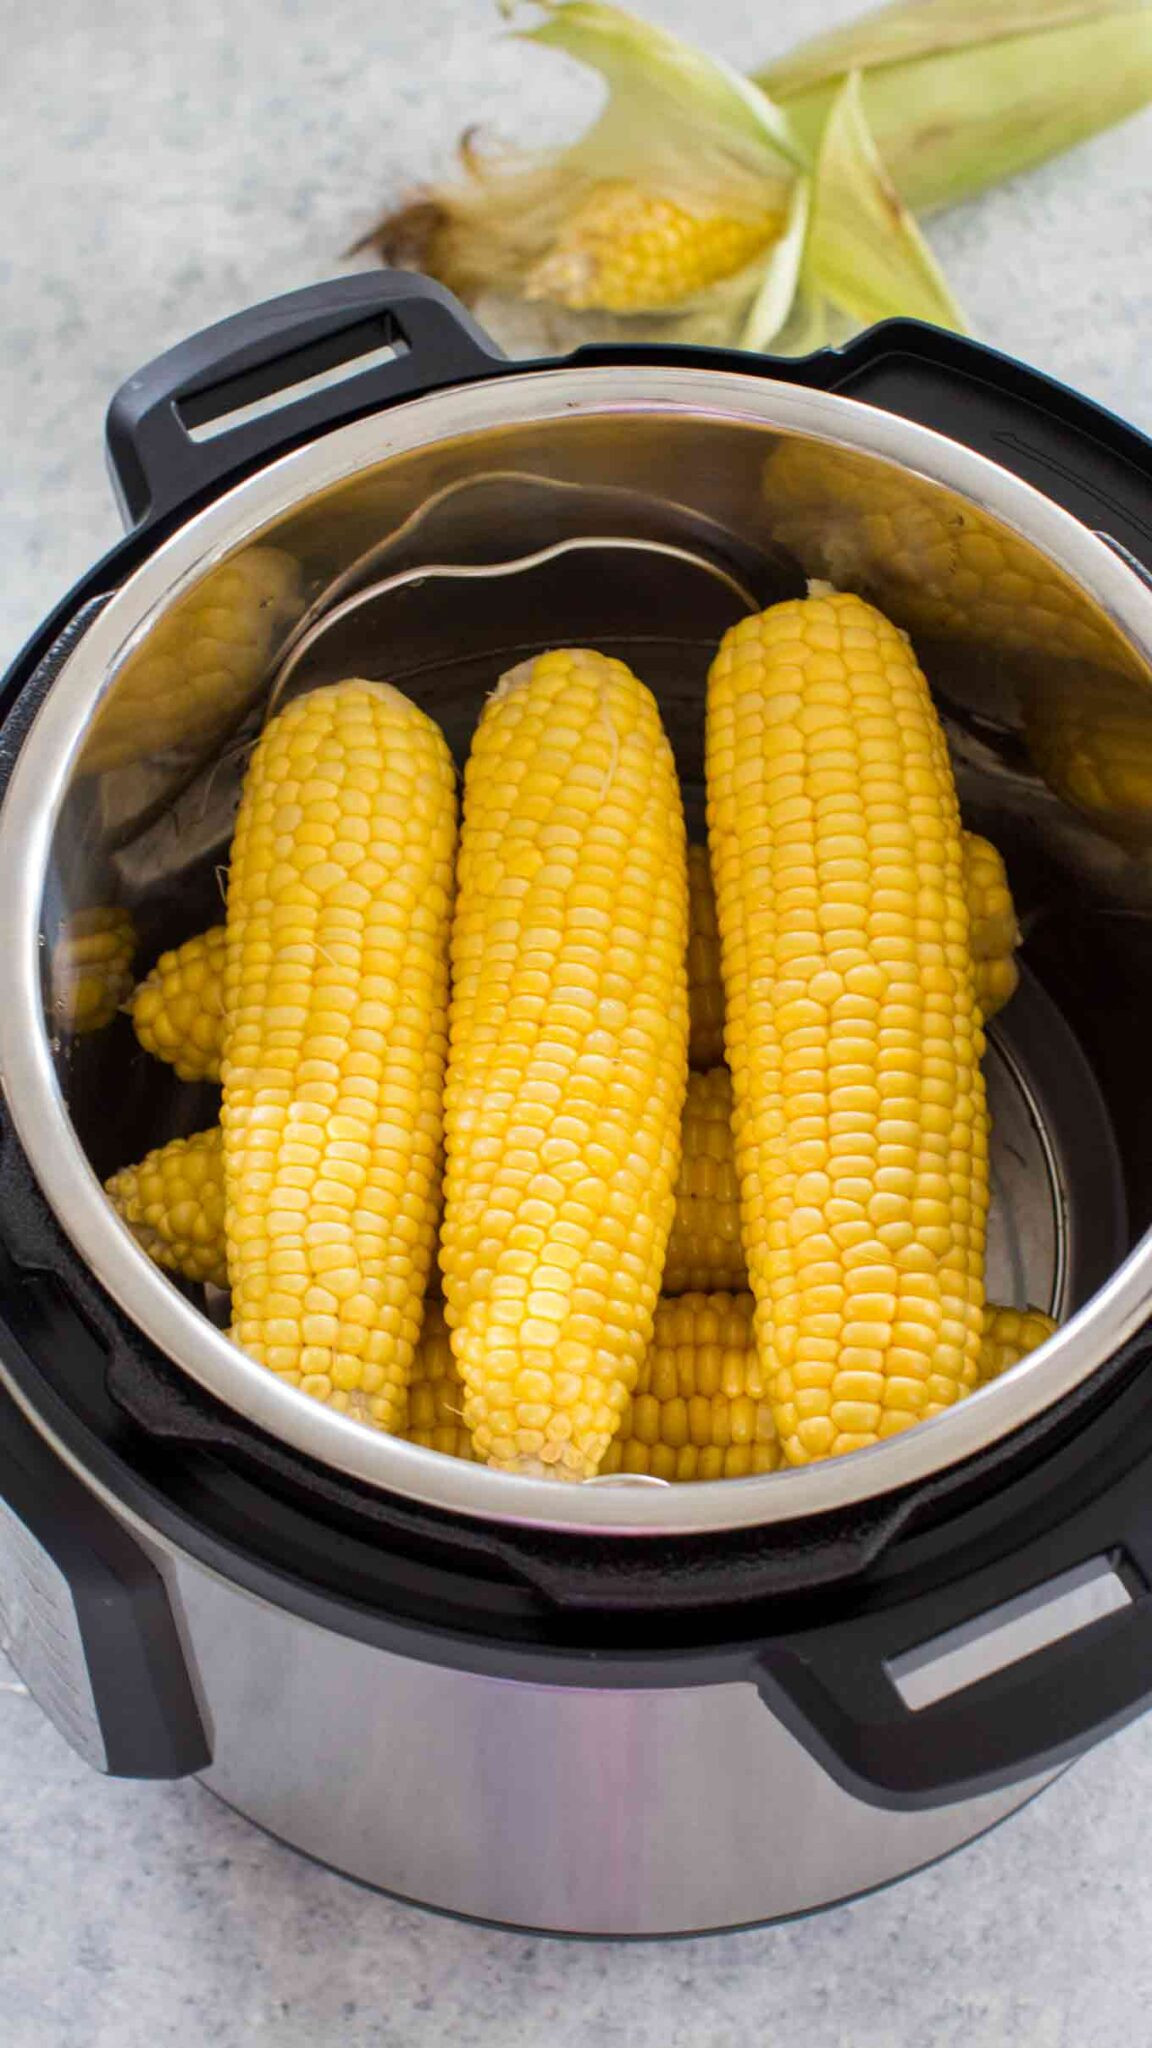 Instant Pot Corn Beautiful Instant Pot Corn the Cob [video] Sweet and Savory Meals